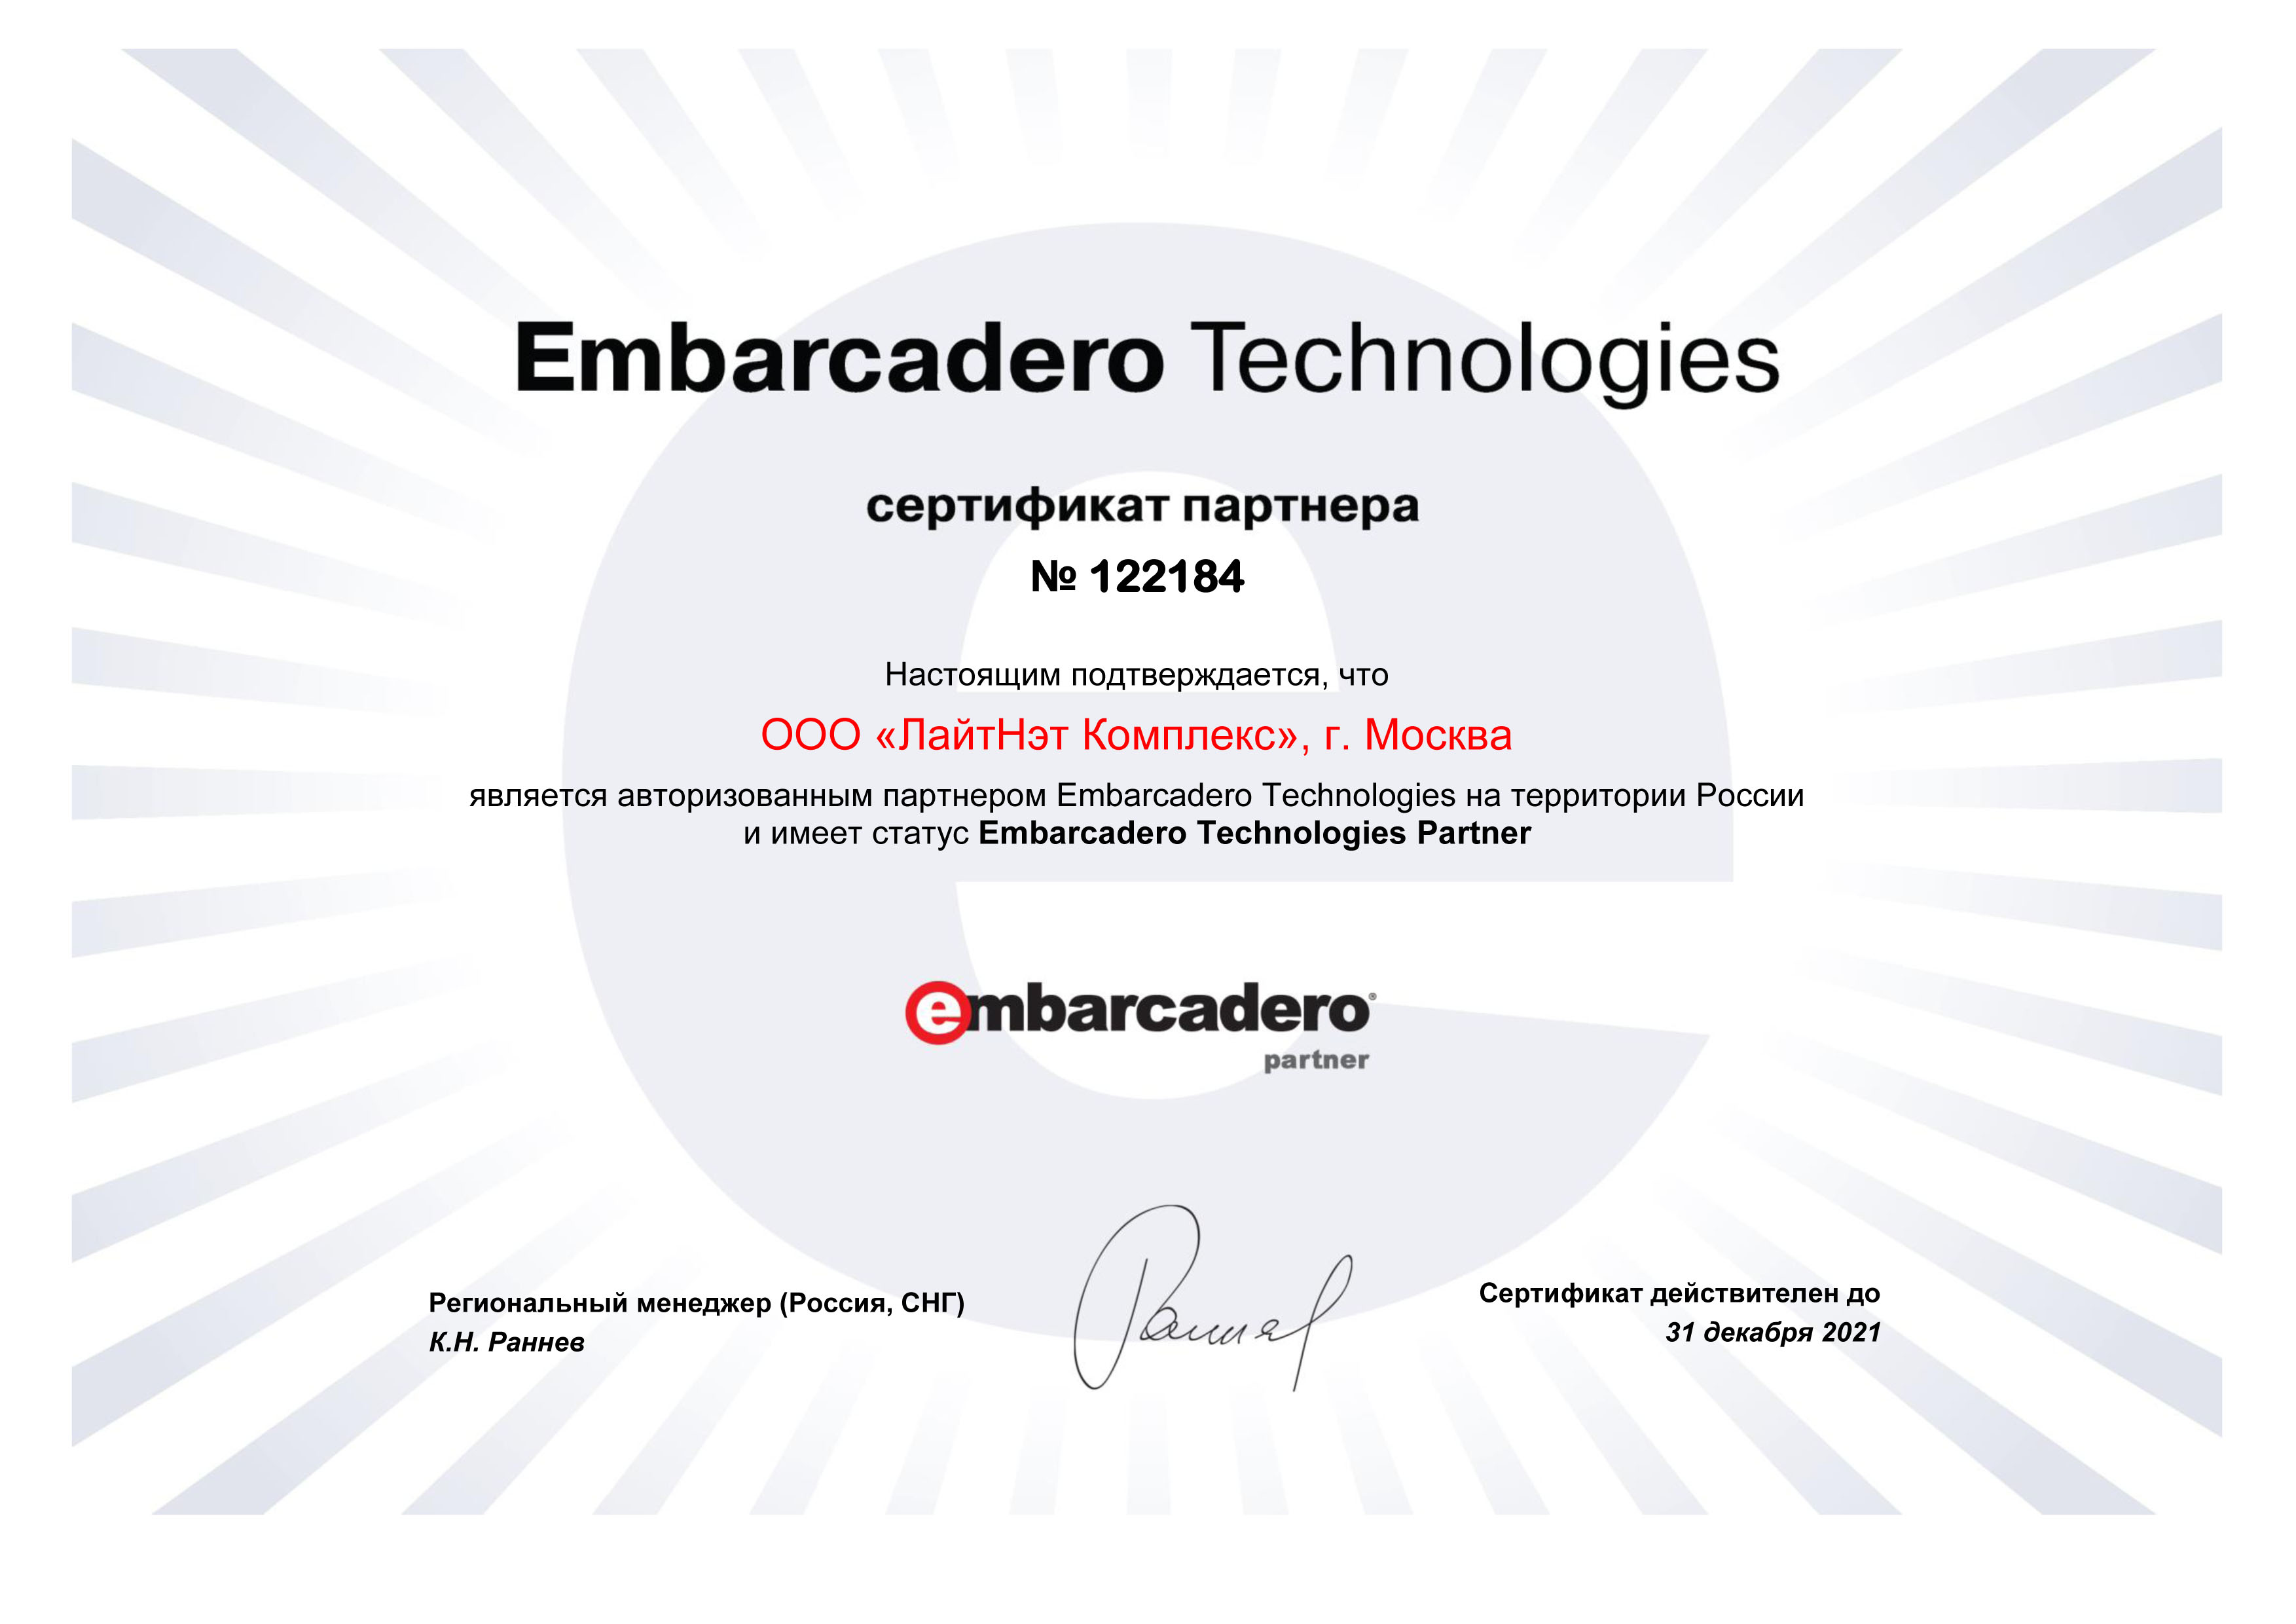 Embarcadero Technologies - Embarcadero Technologies Partner